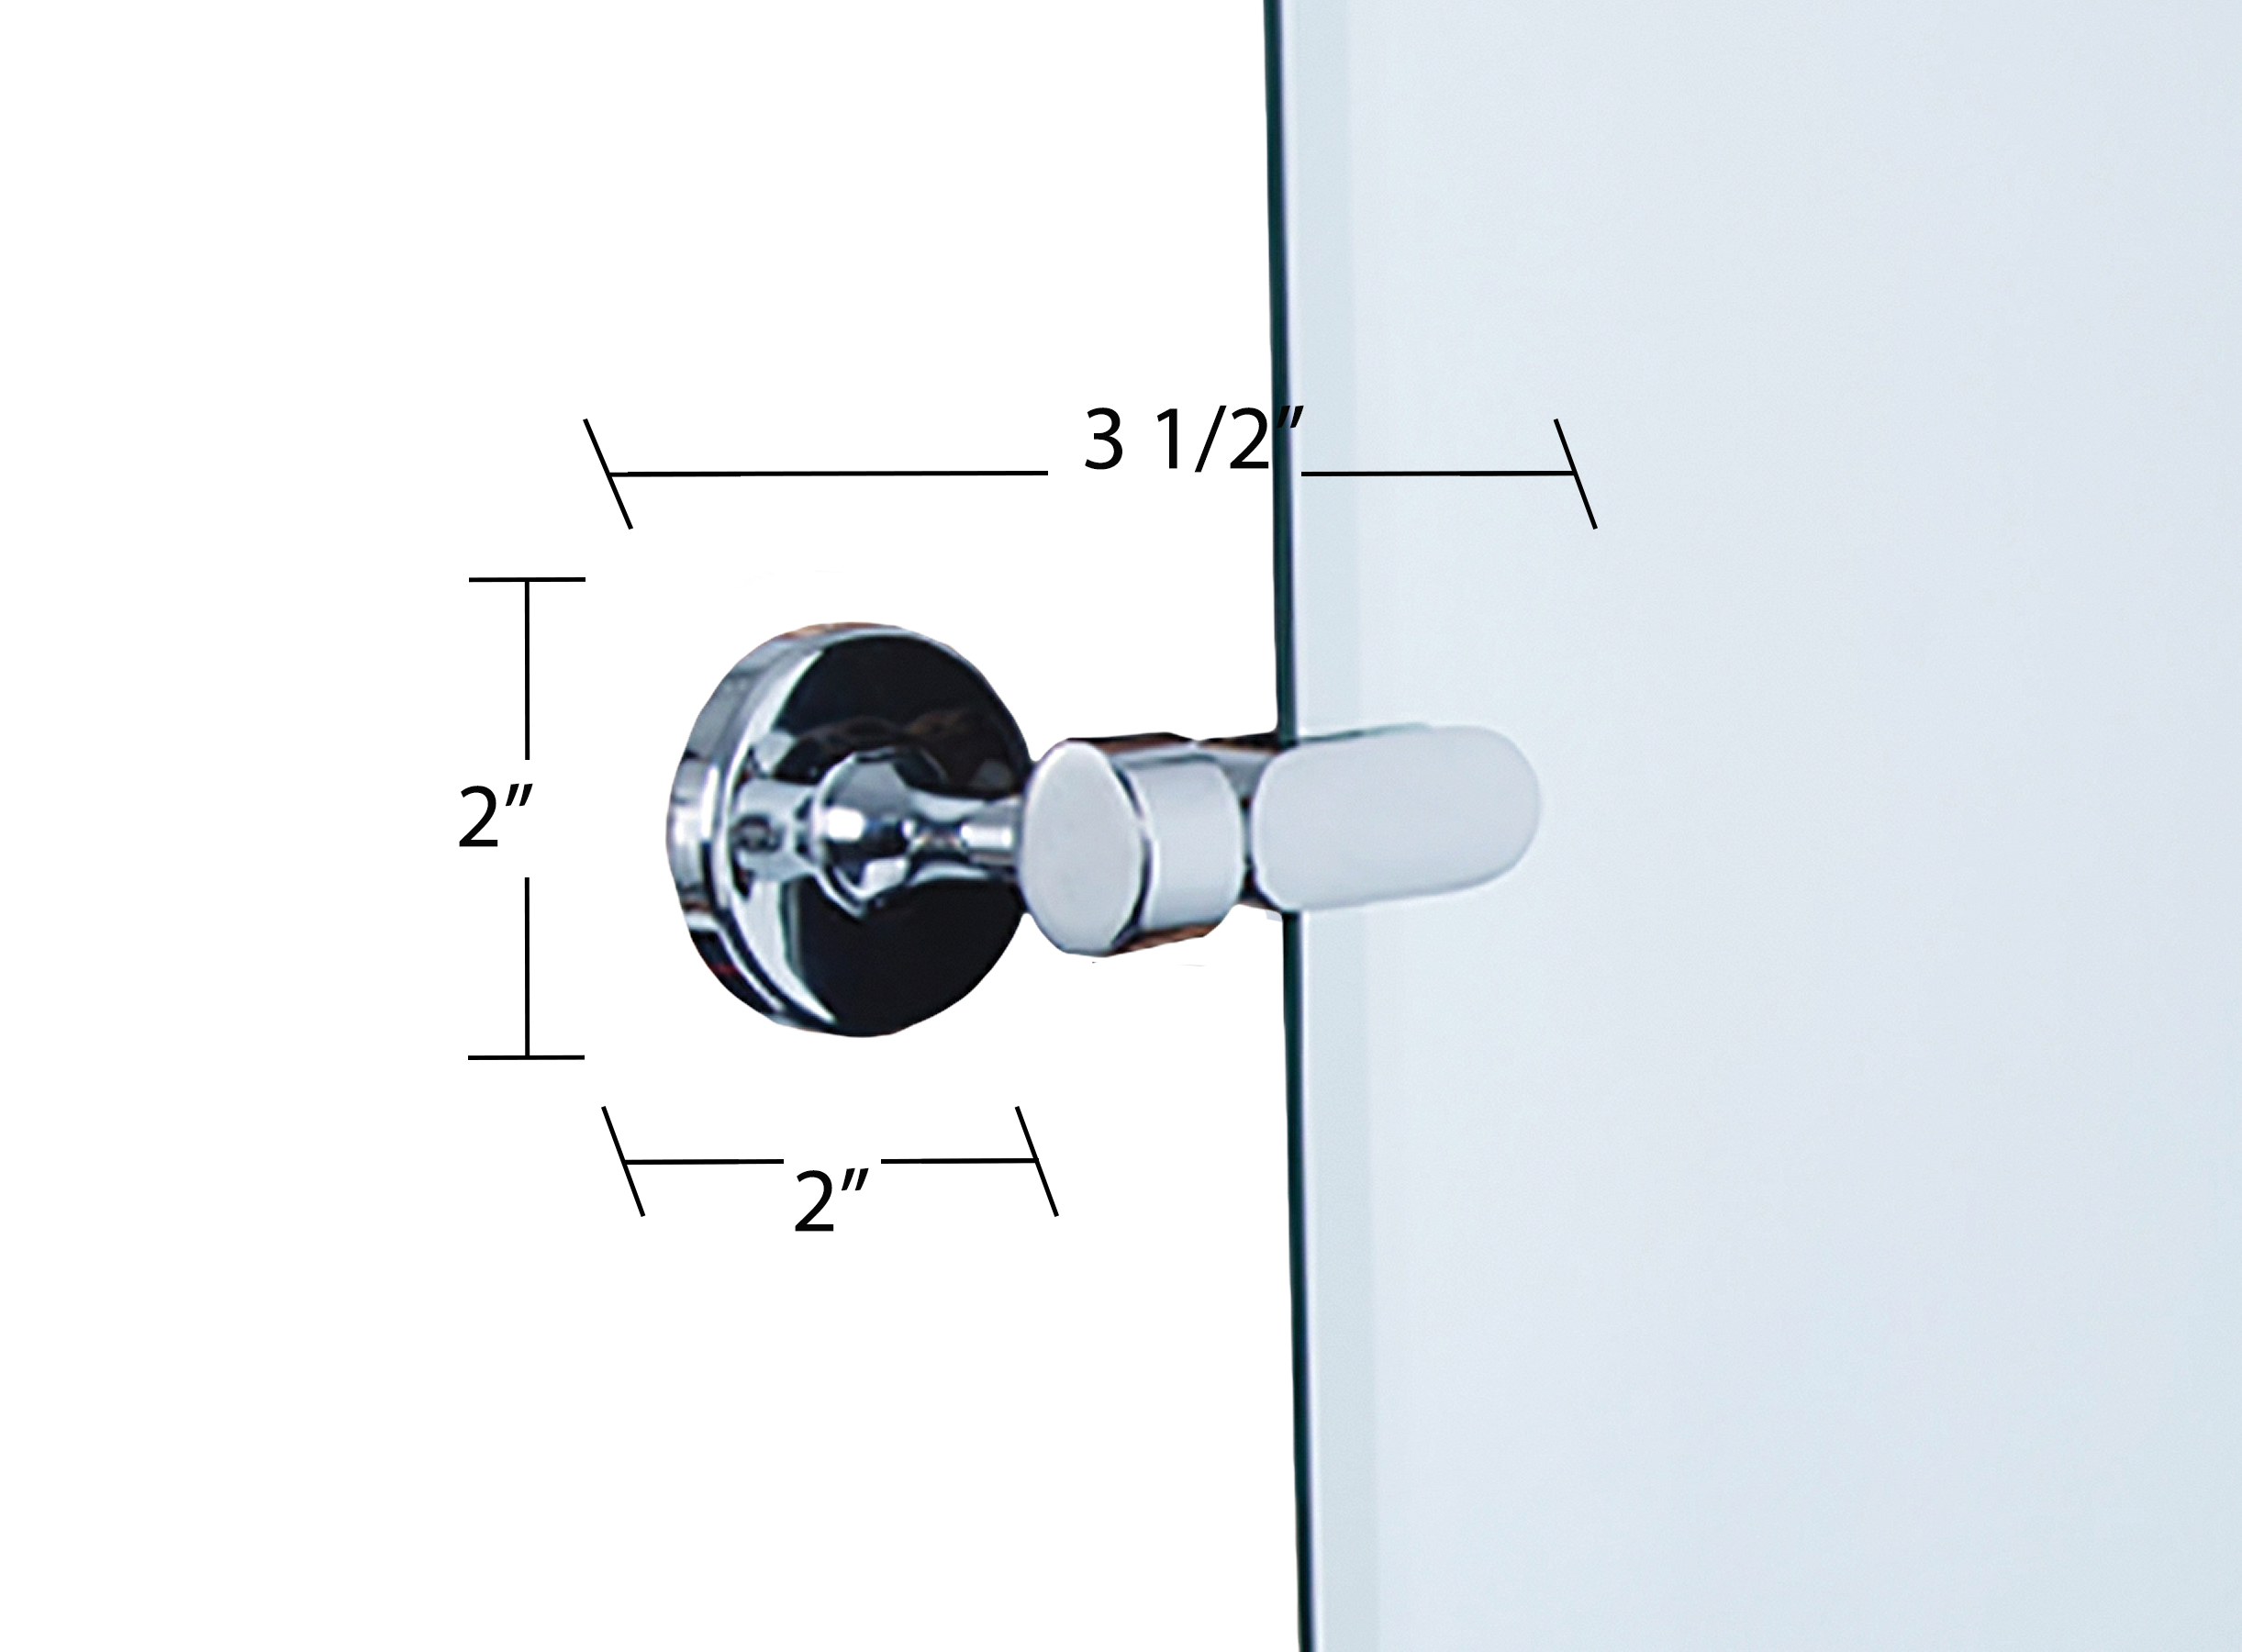 21''W x 24''H Rectangular Frameless Bathroom Pivot Mirror - Available in 3 Colors